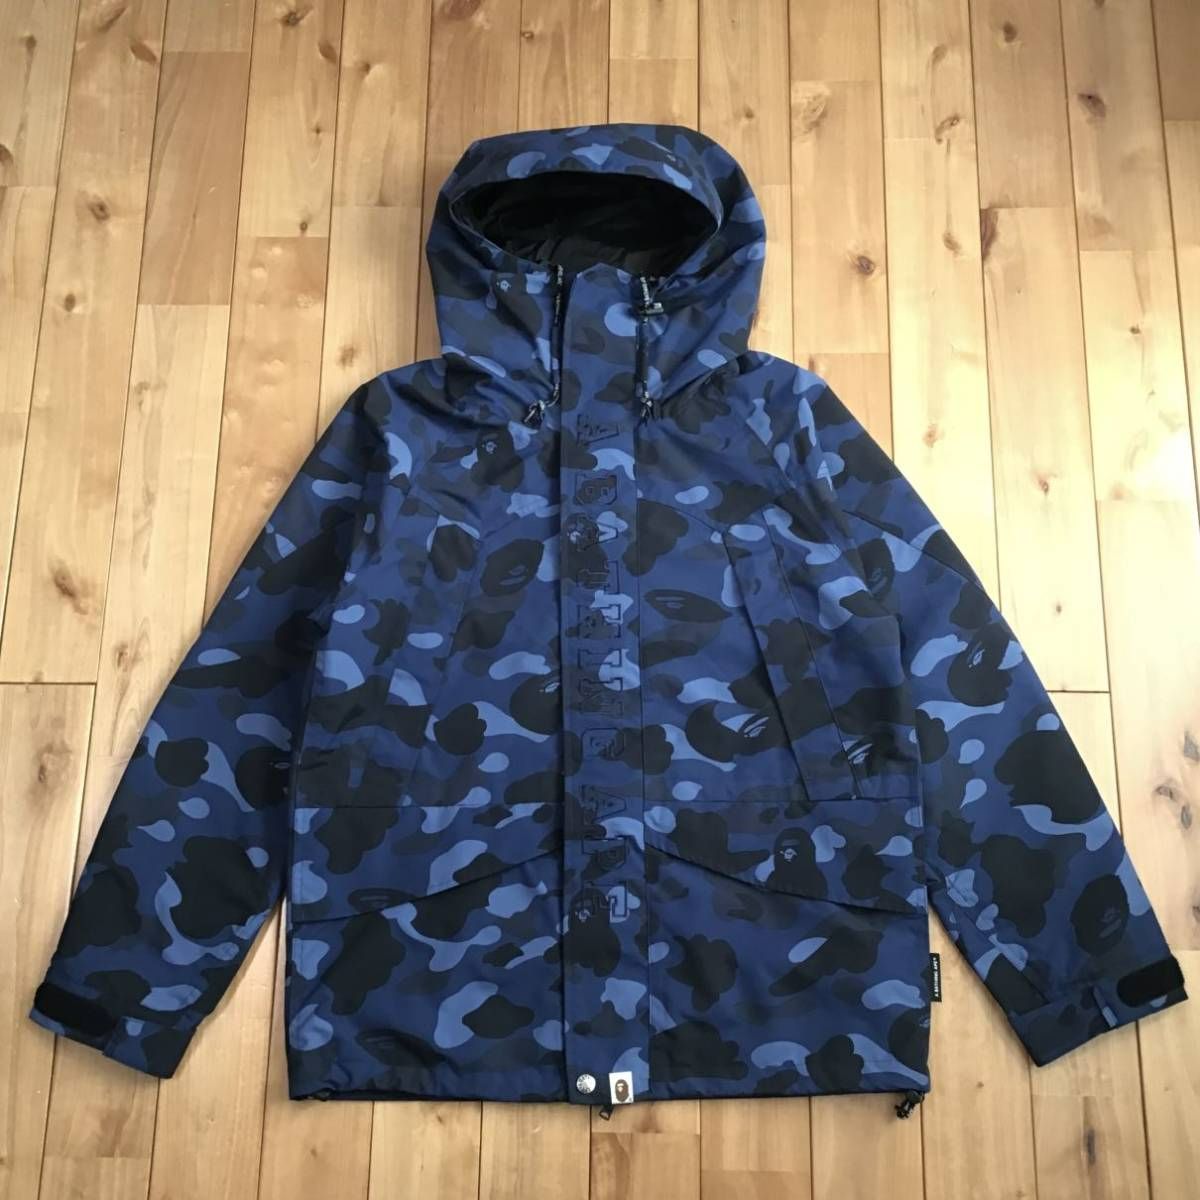 Blue camo スノボジャケット Mサイズ a bathing ape BAPE hoodie ...